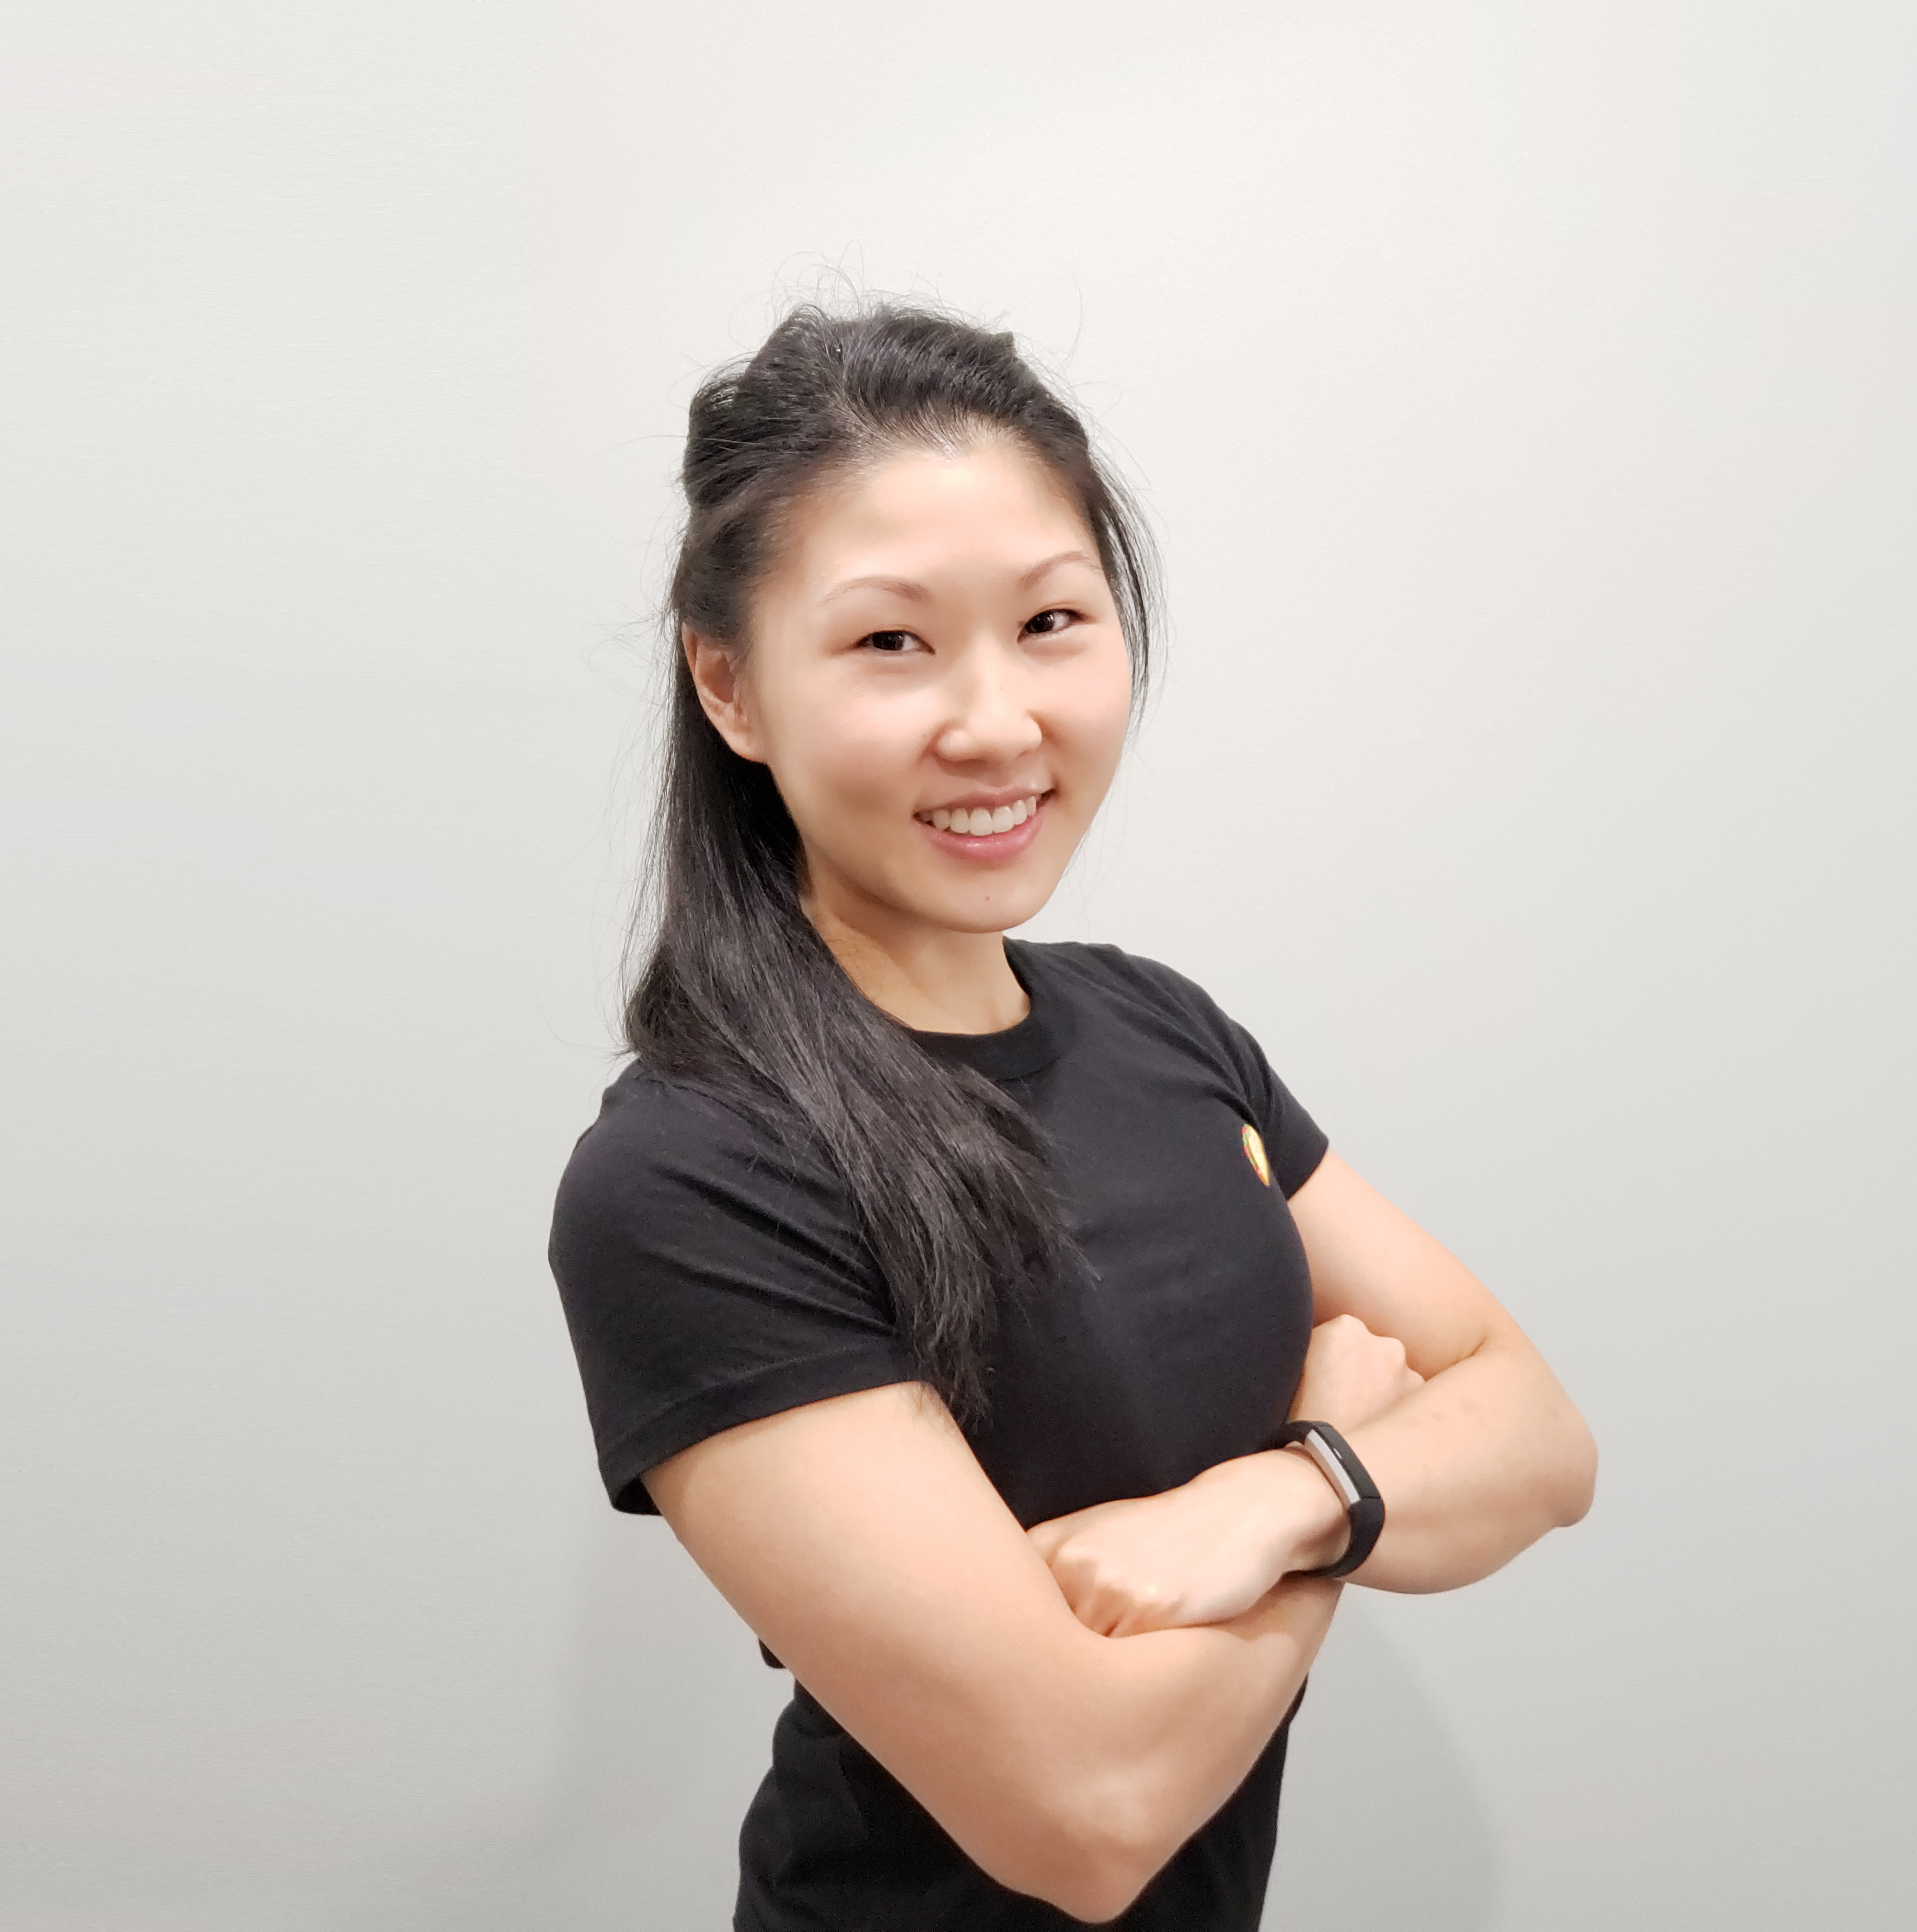 Elaine Chang, Registered Massage Therapist, RMT